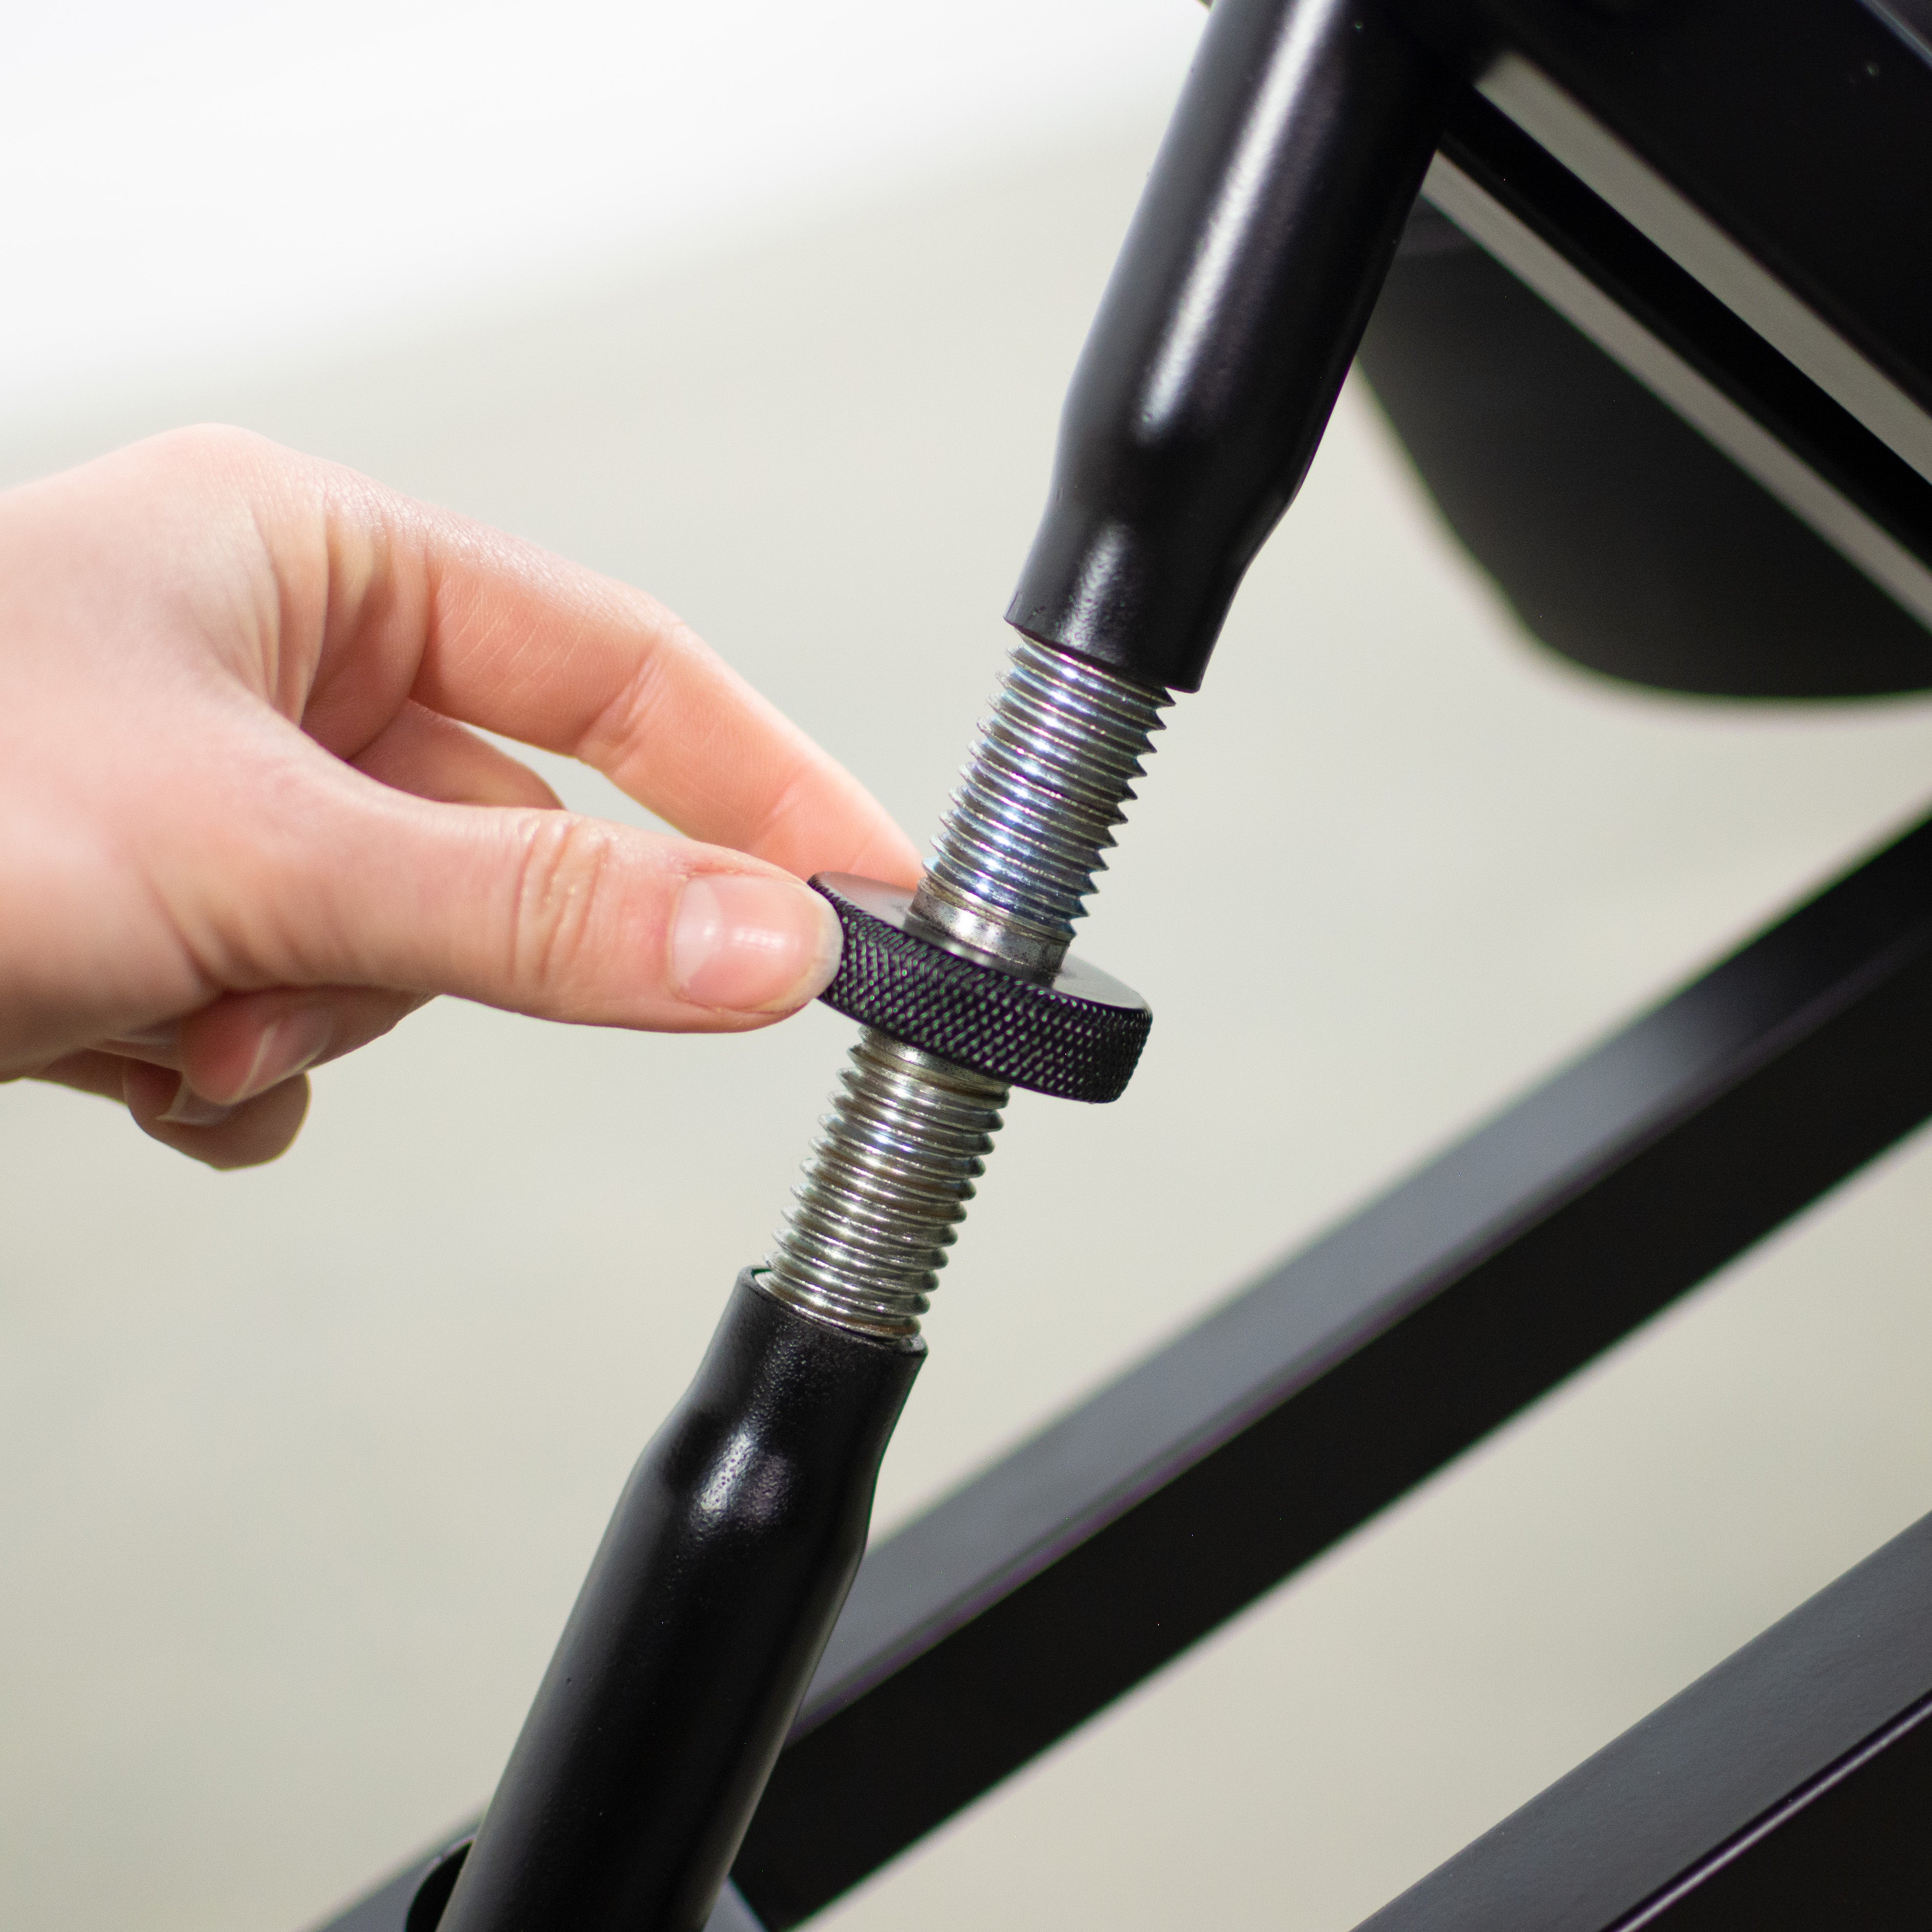 Qinlorgo Ergonomic Kneeling Chair Adjustable Posture Correction Knee Stool  with Back Support 